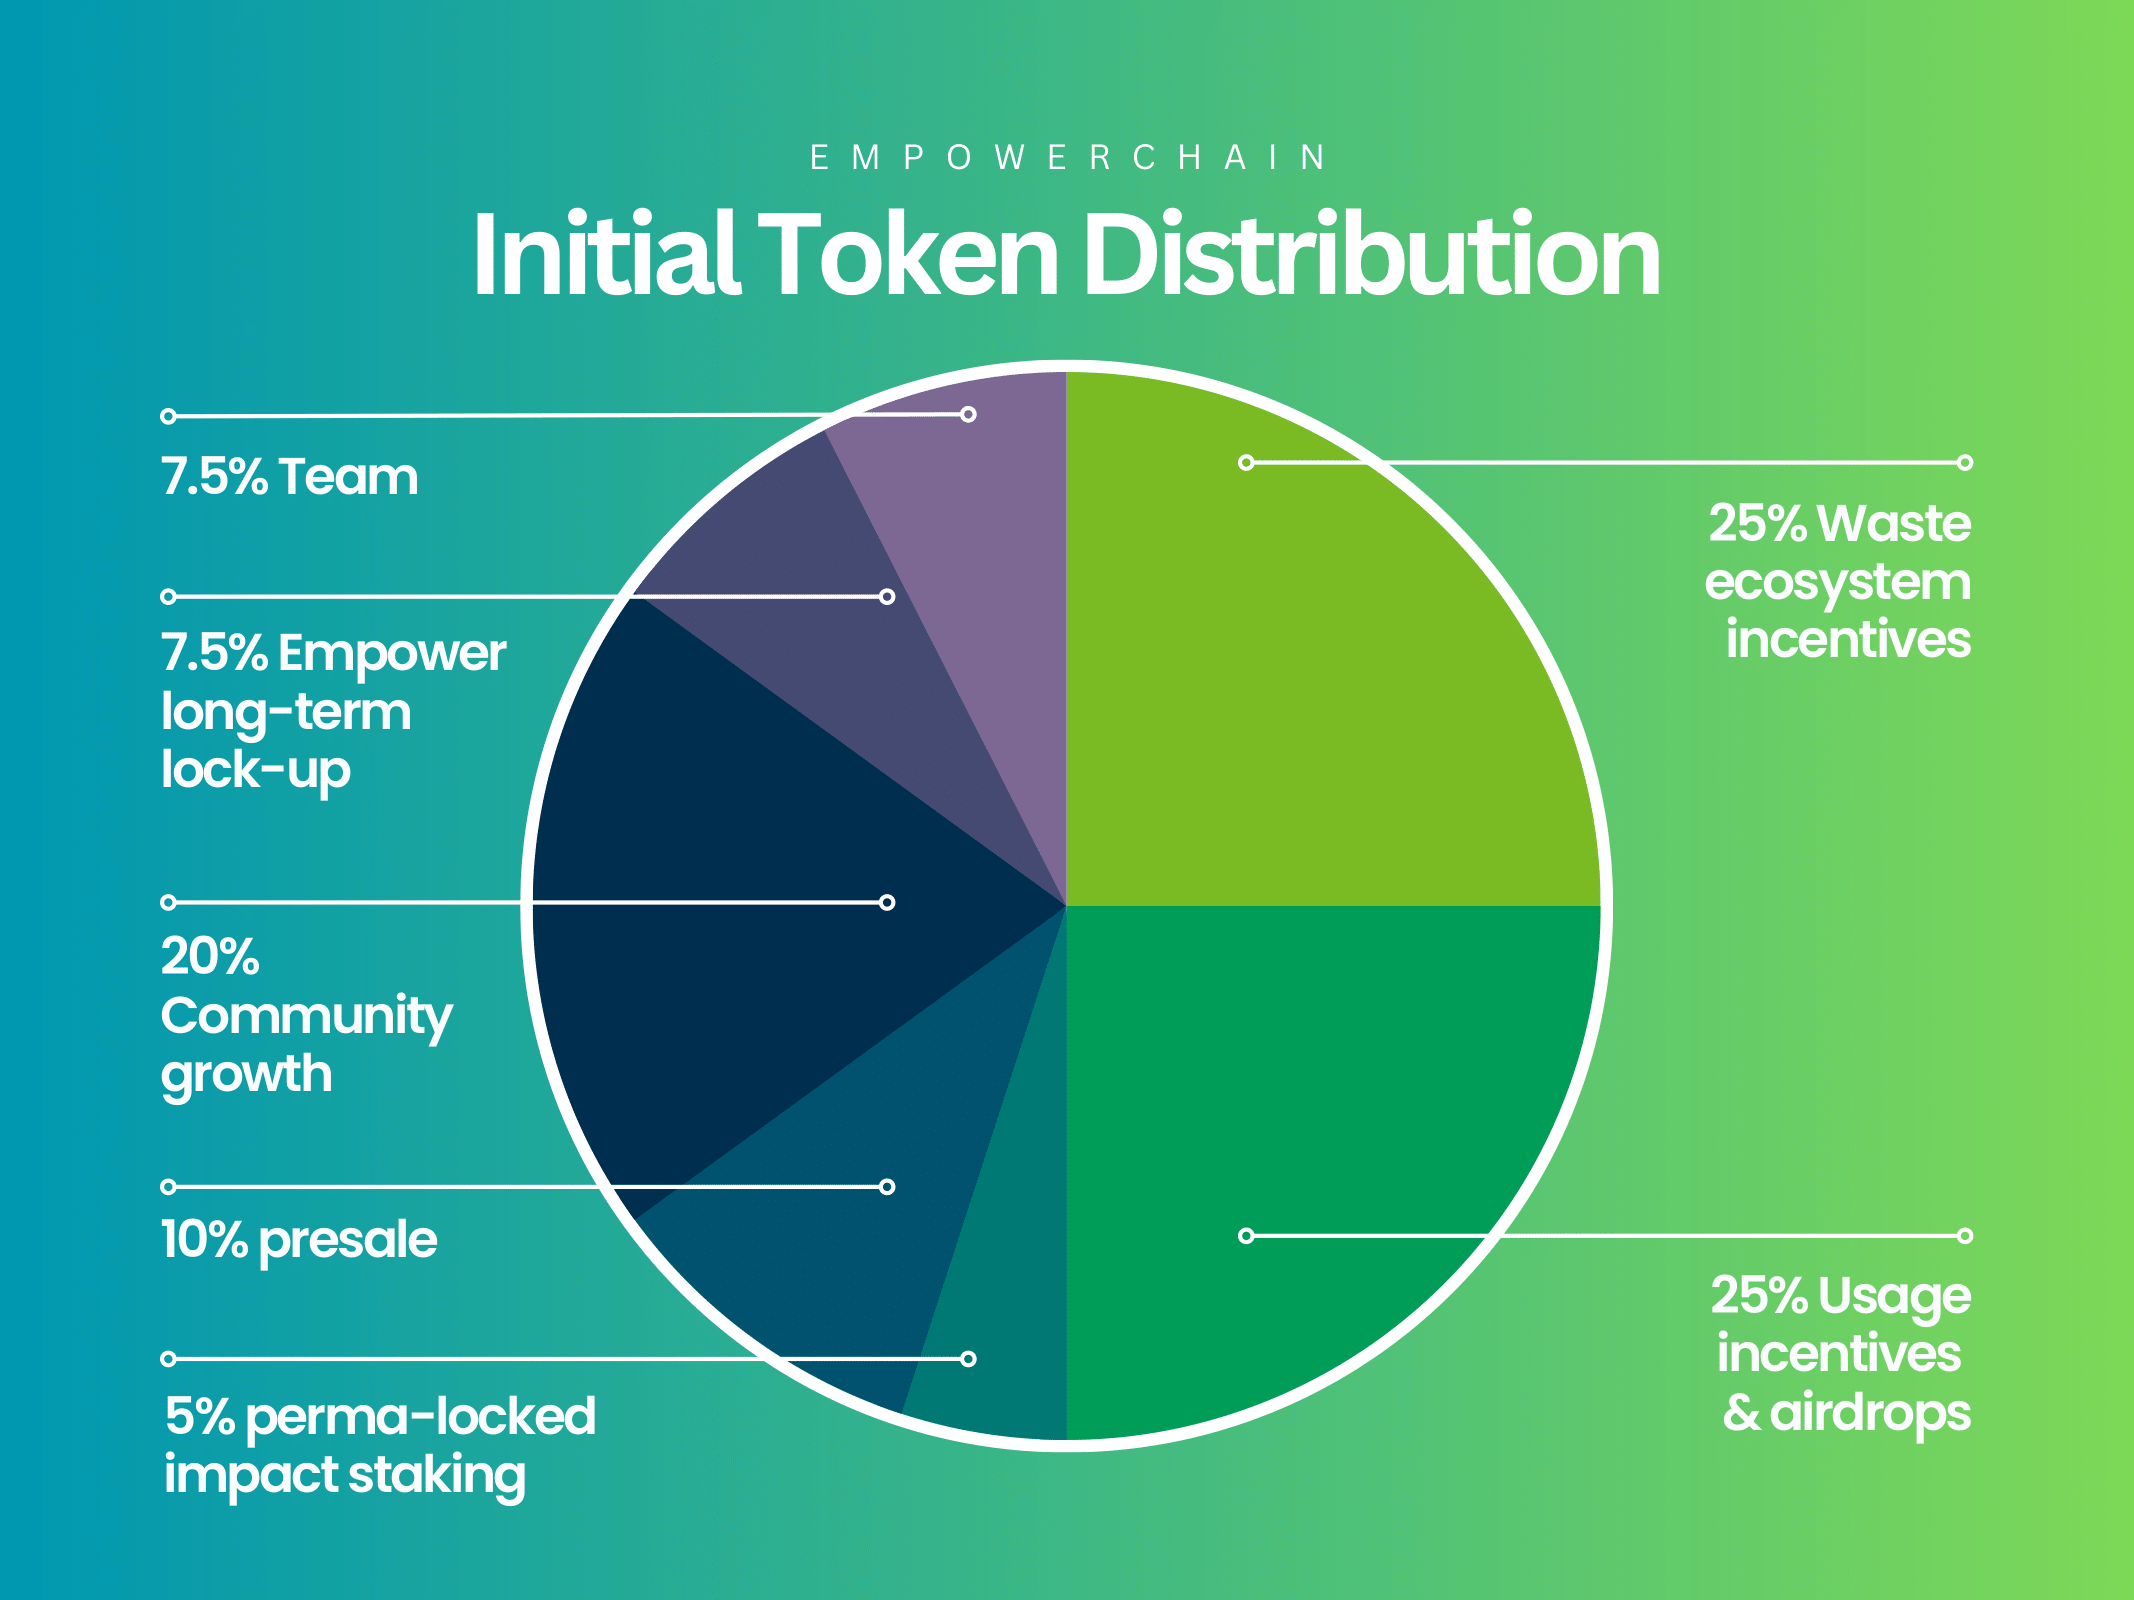 token-distribution.png